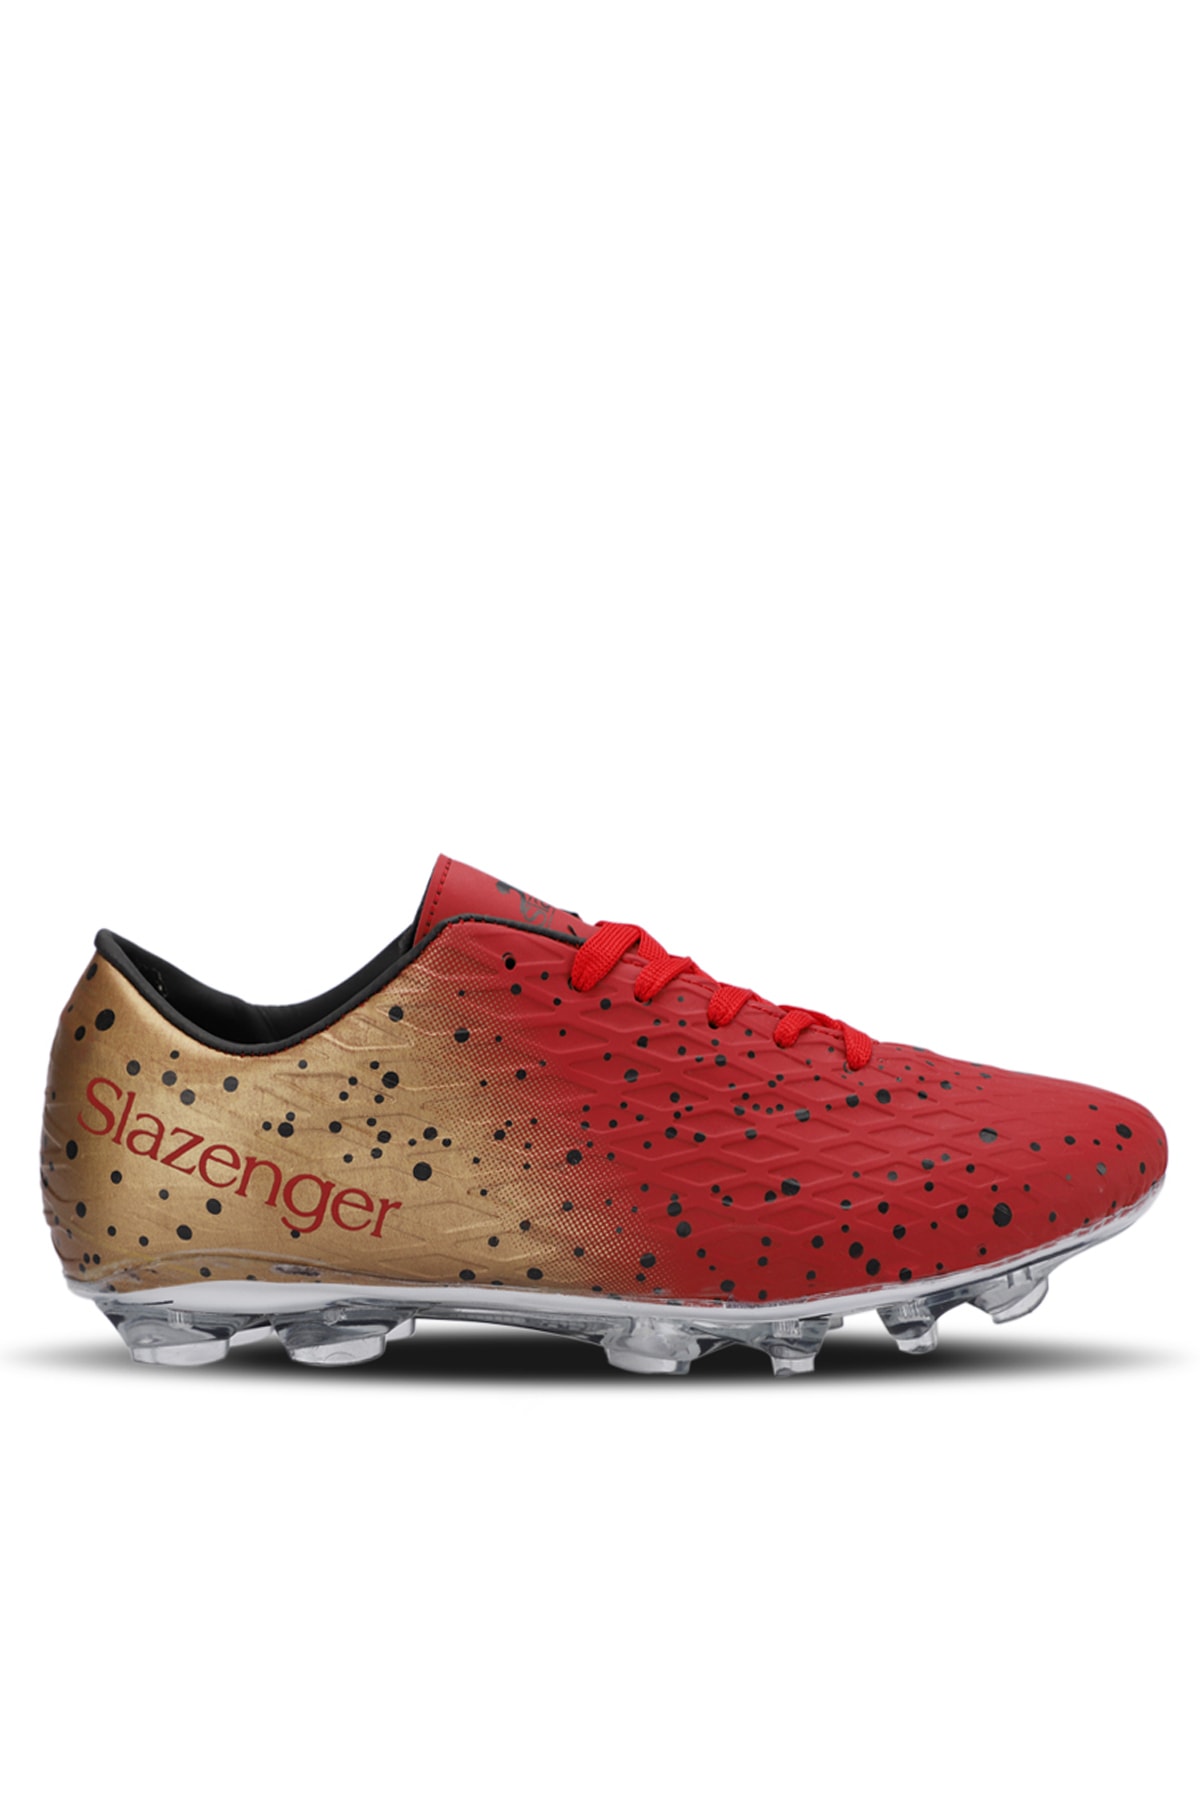 Levně Slazenger Hania Krp Football Men's Astroturf Field Shoes Claret Red